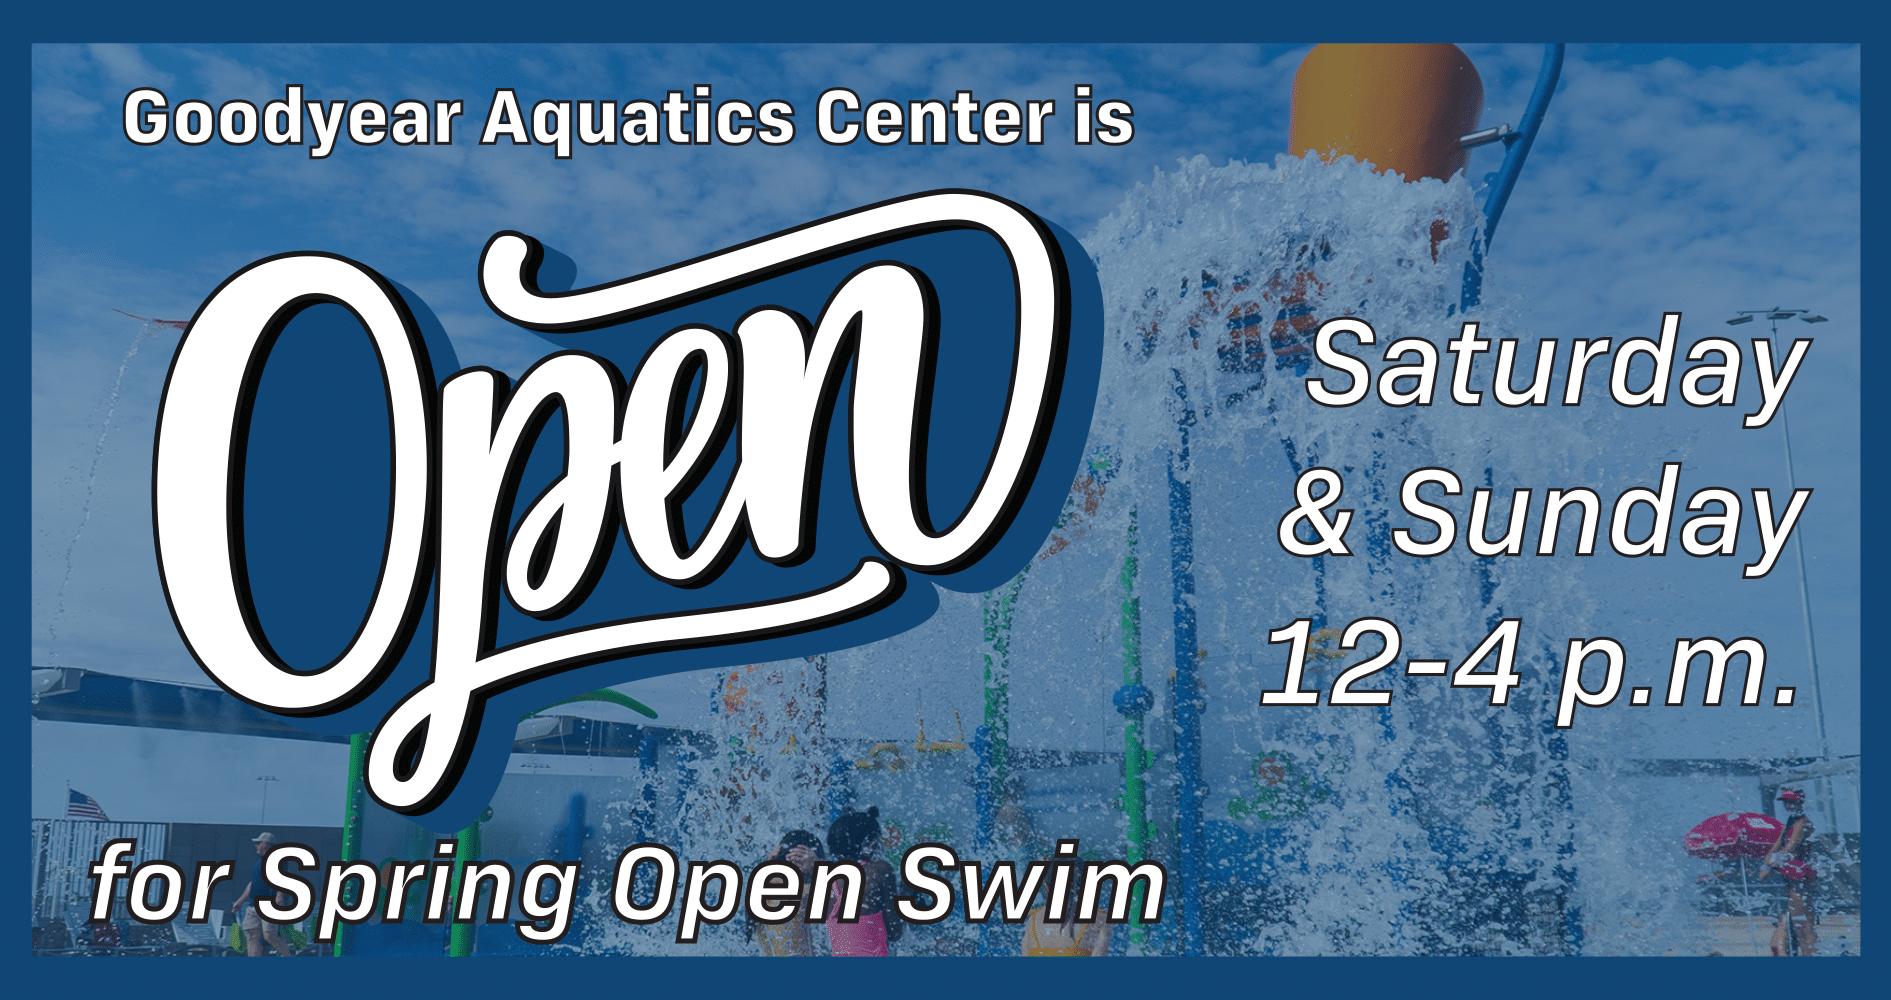 goodyear-aquatics-center-spring-open-swim